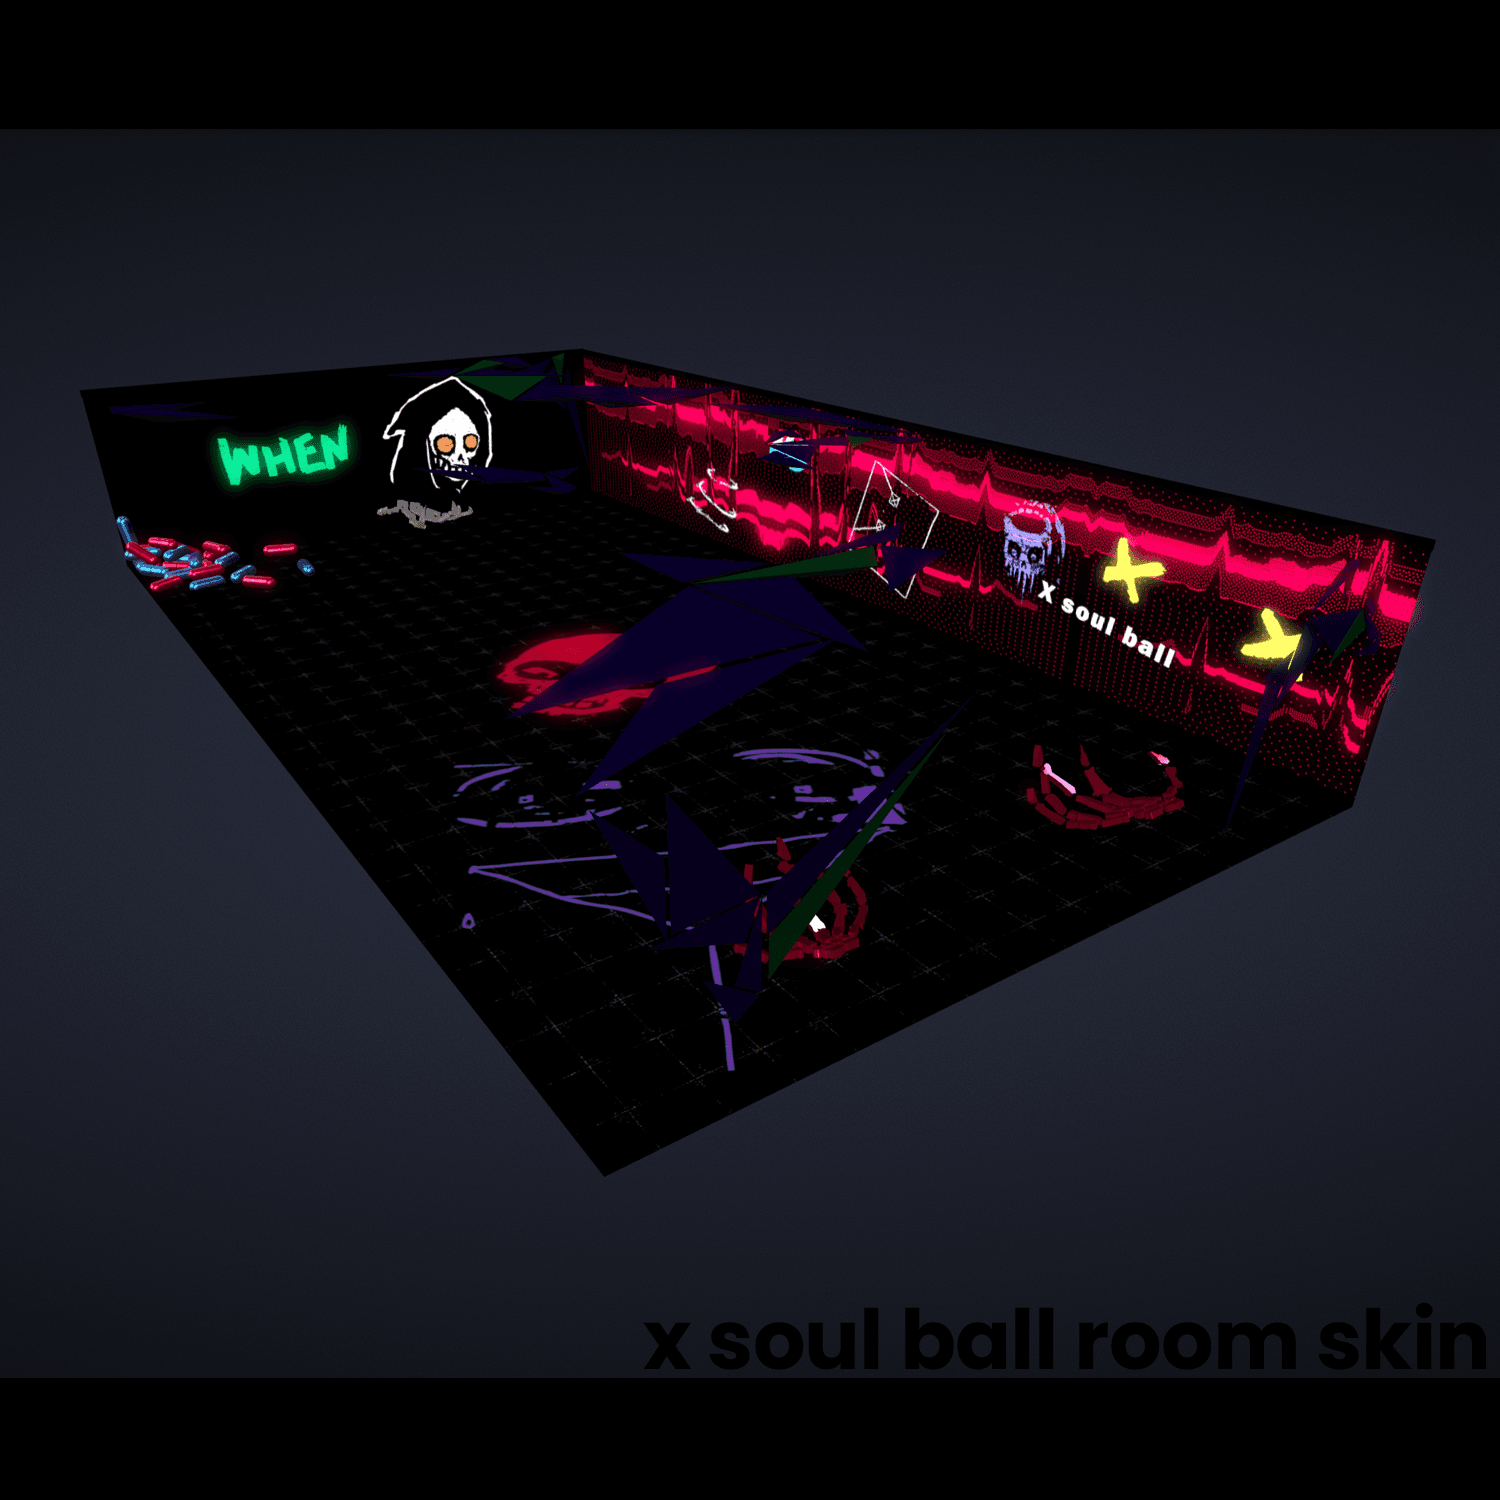 x soul ball room skin - type01